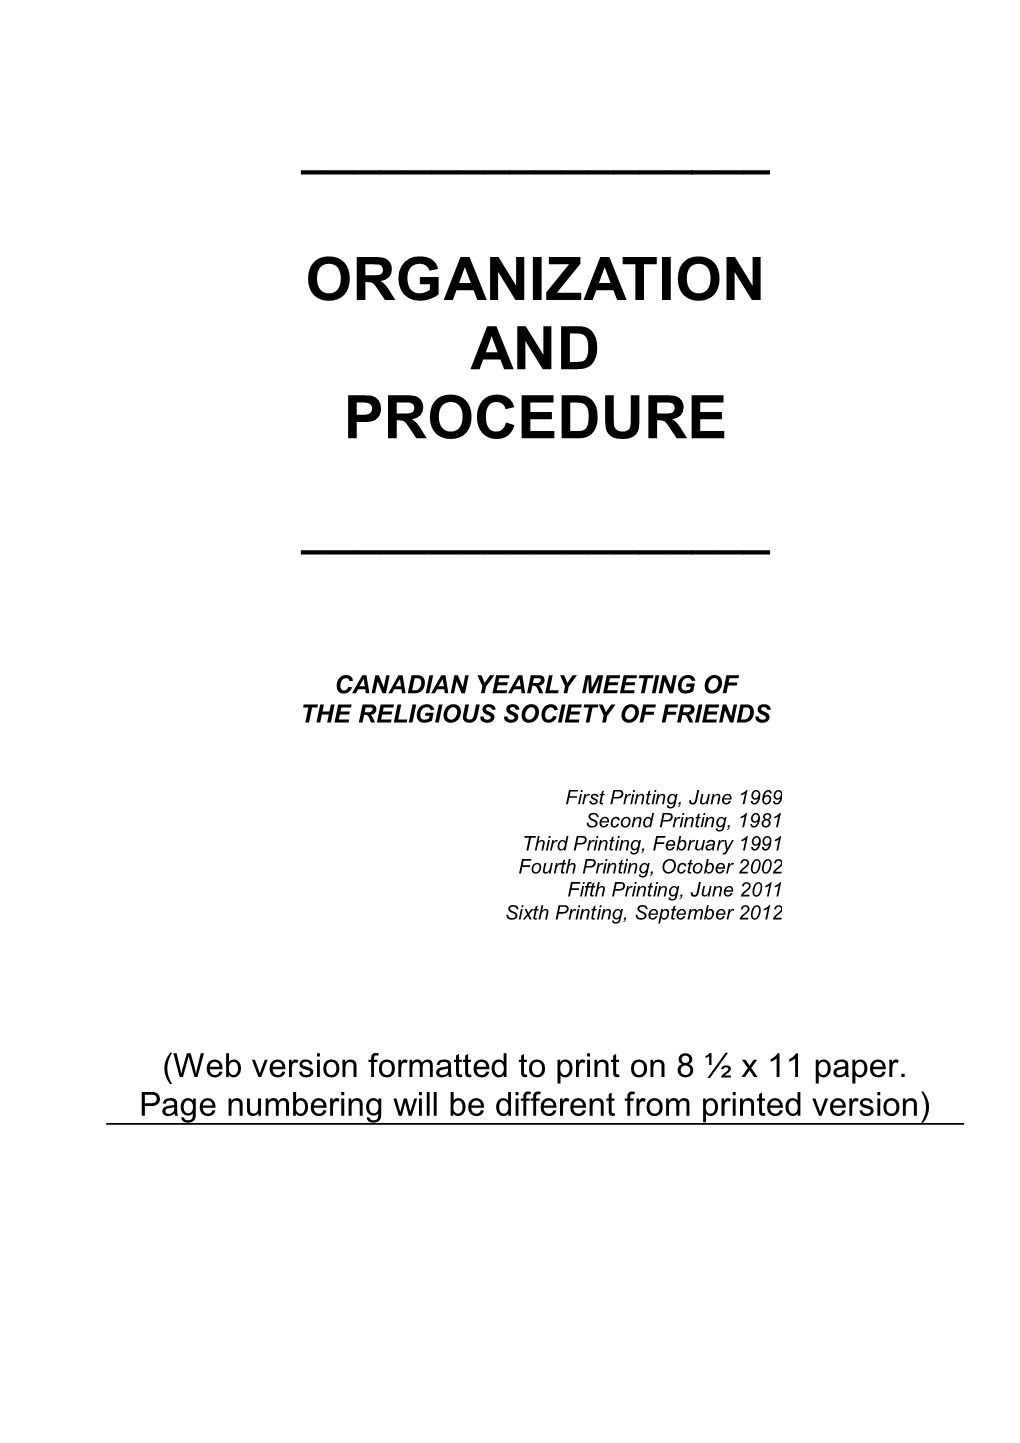 Organization and Procedure